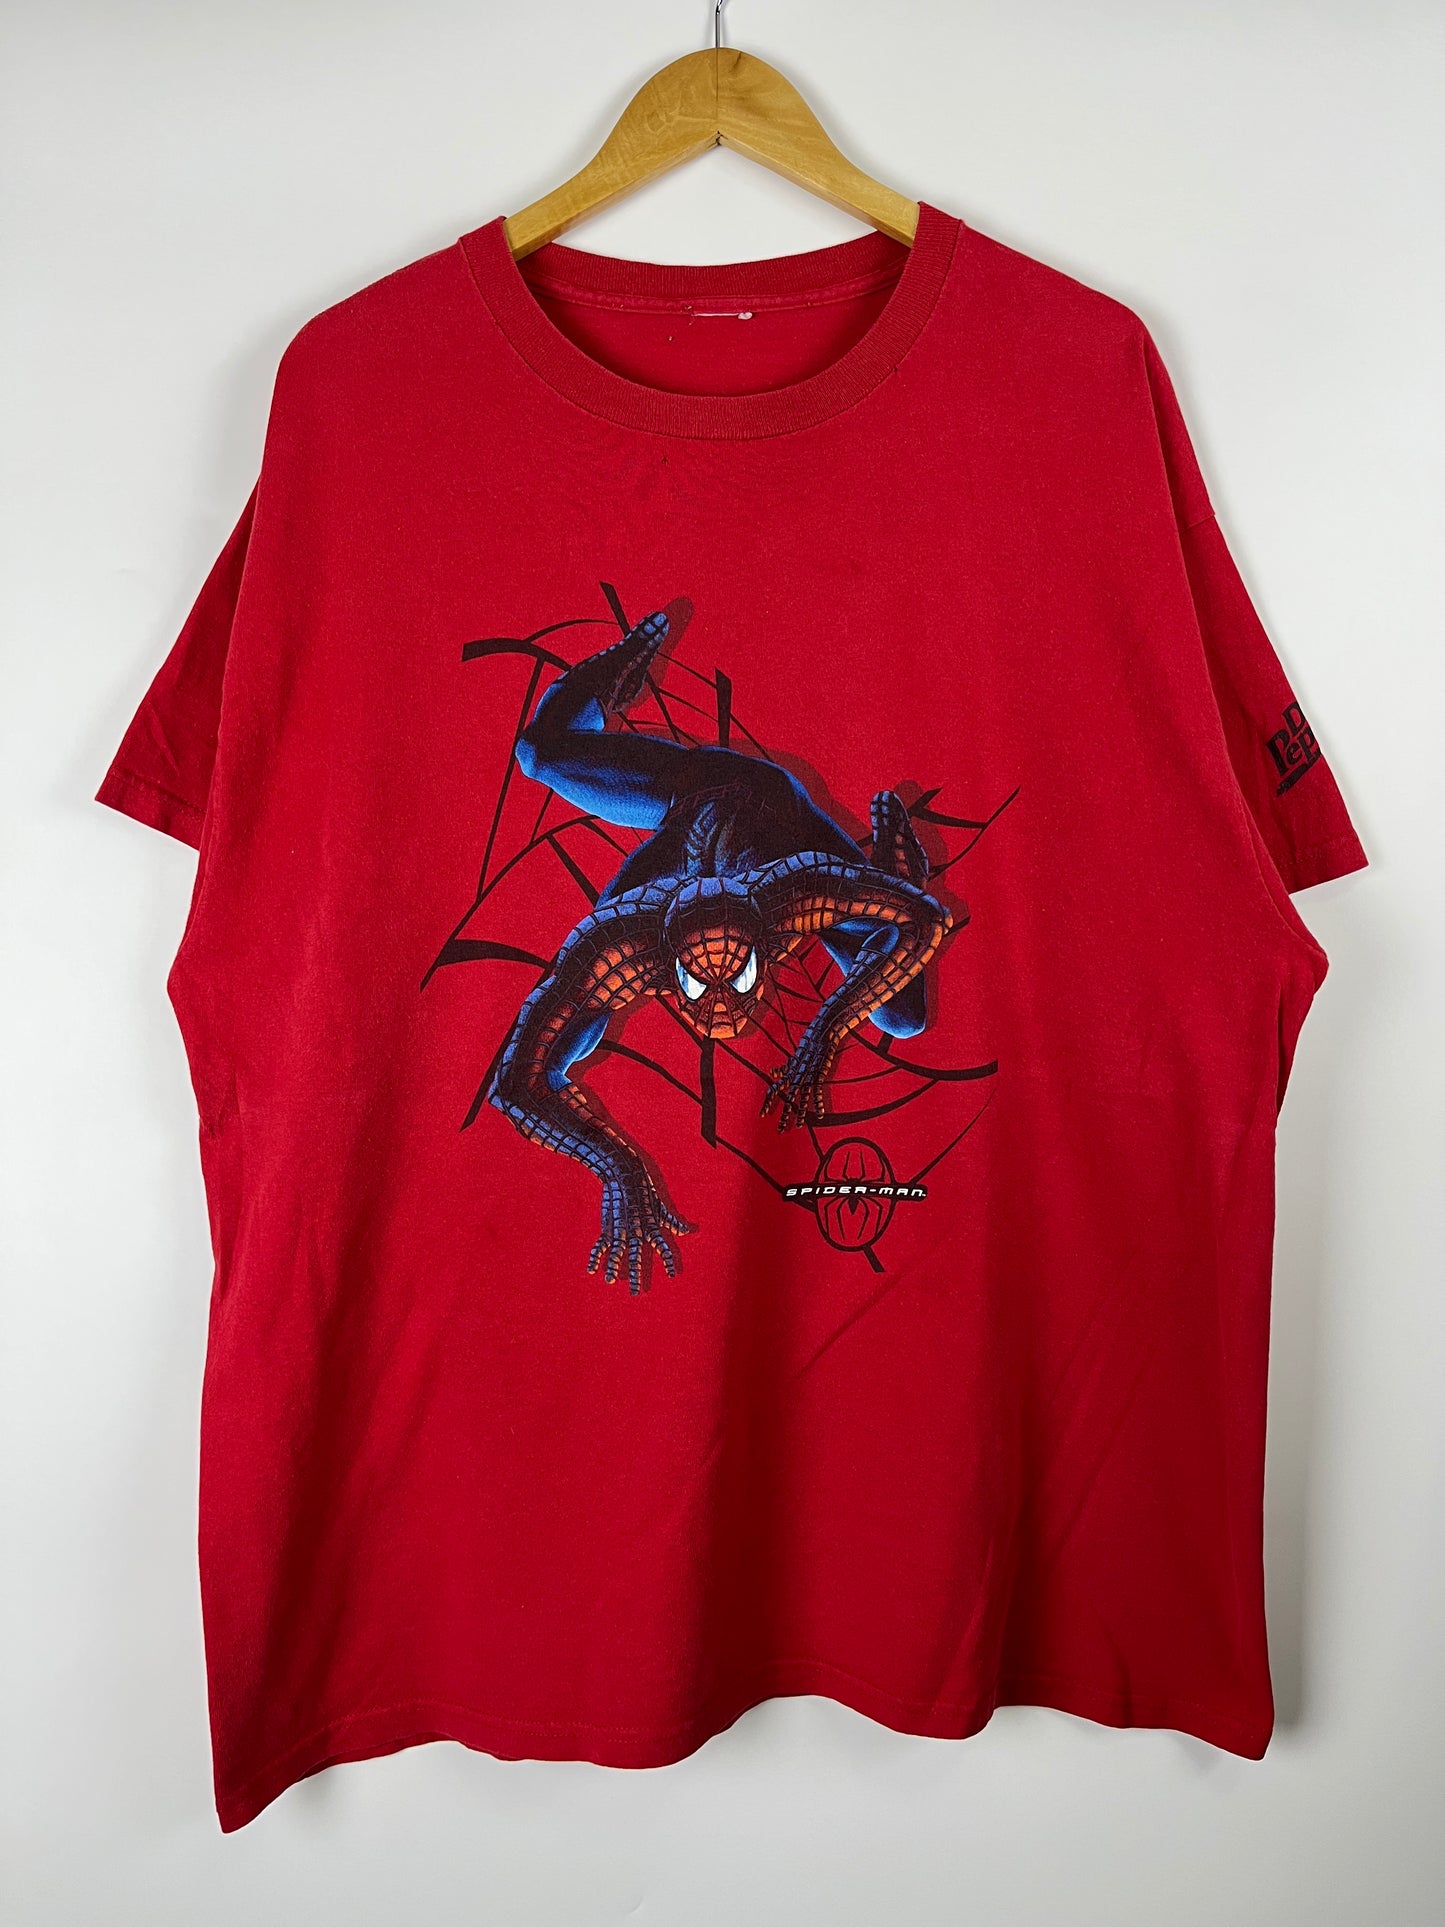 Vintage Spider Man 2002 vintage movies and cartoon T-shirt